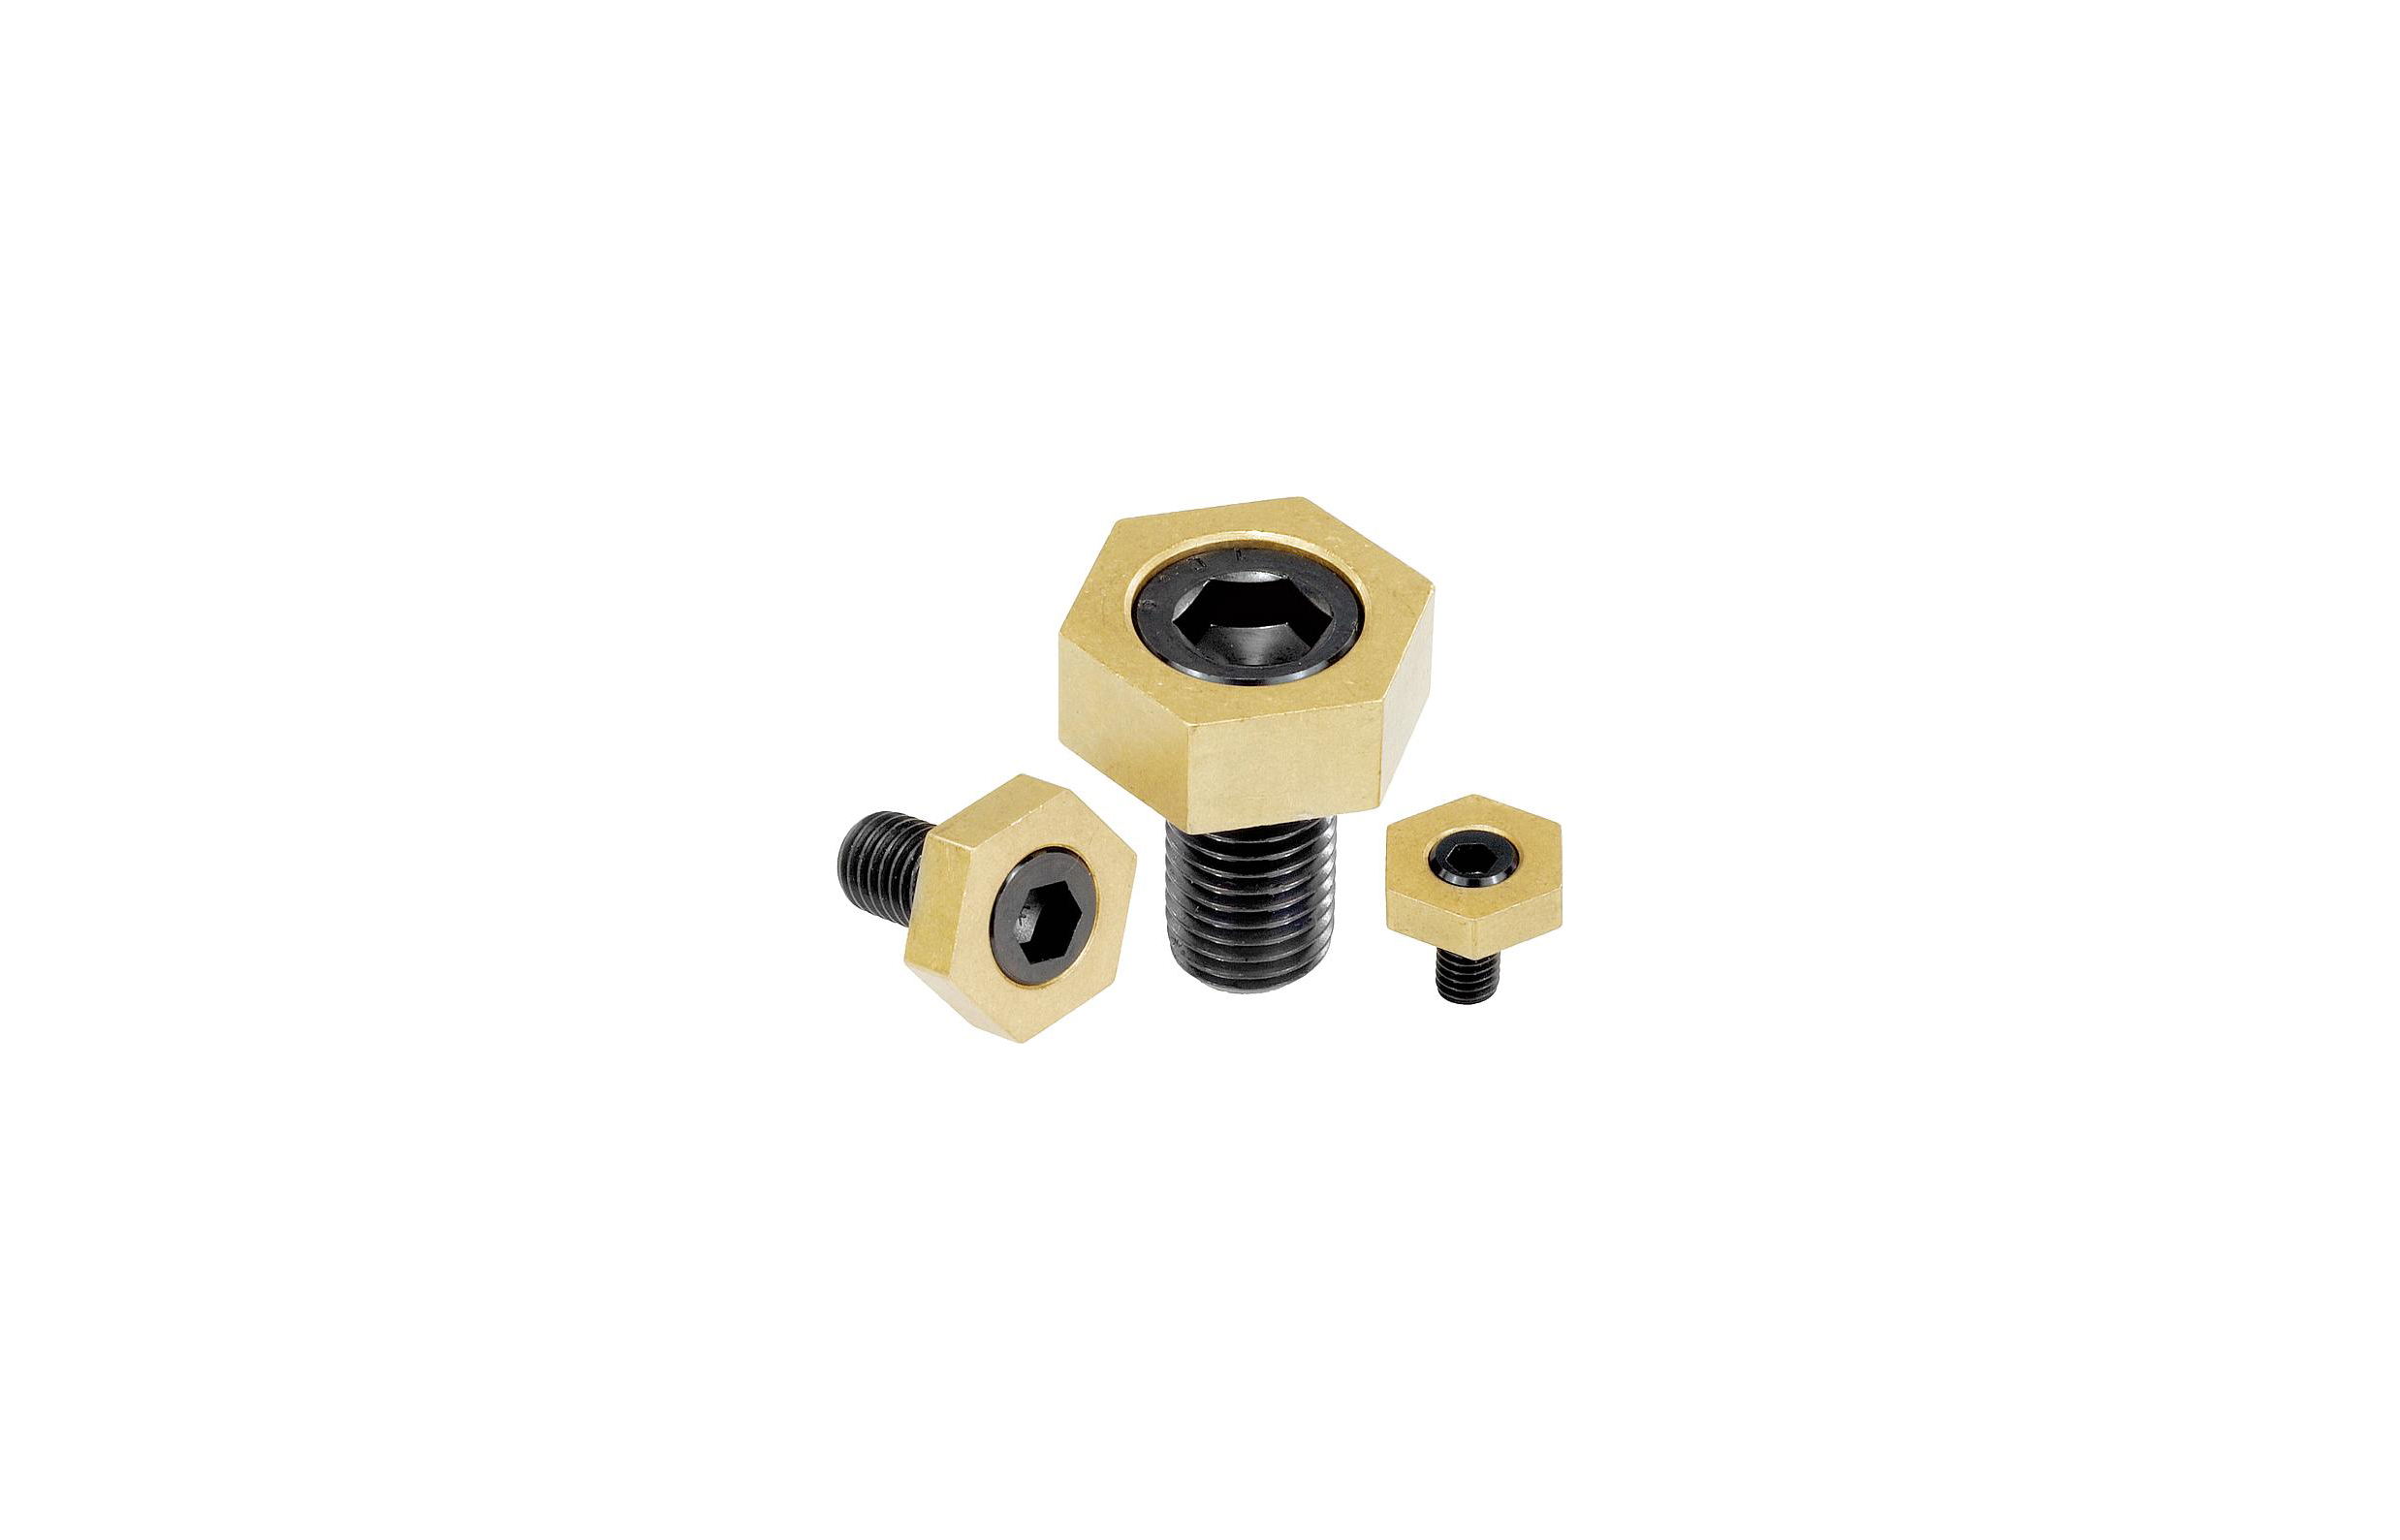 K0026 Cam screws with hexagon washer